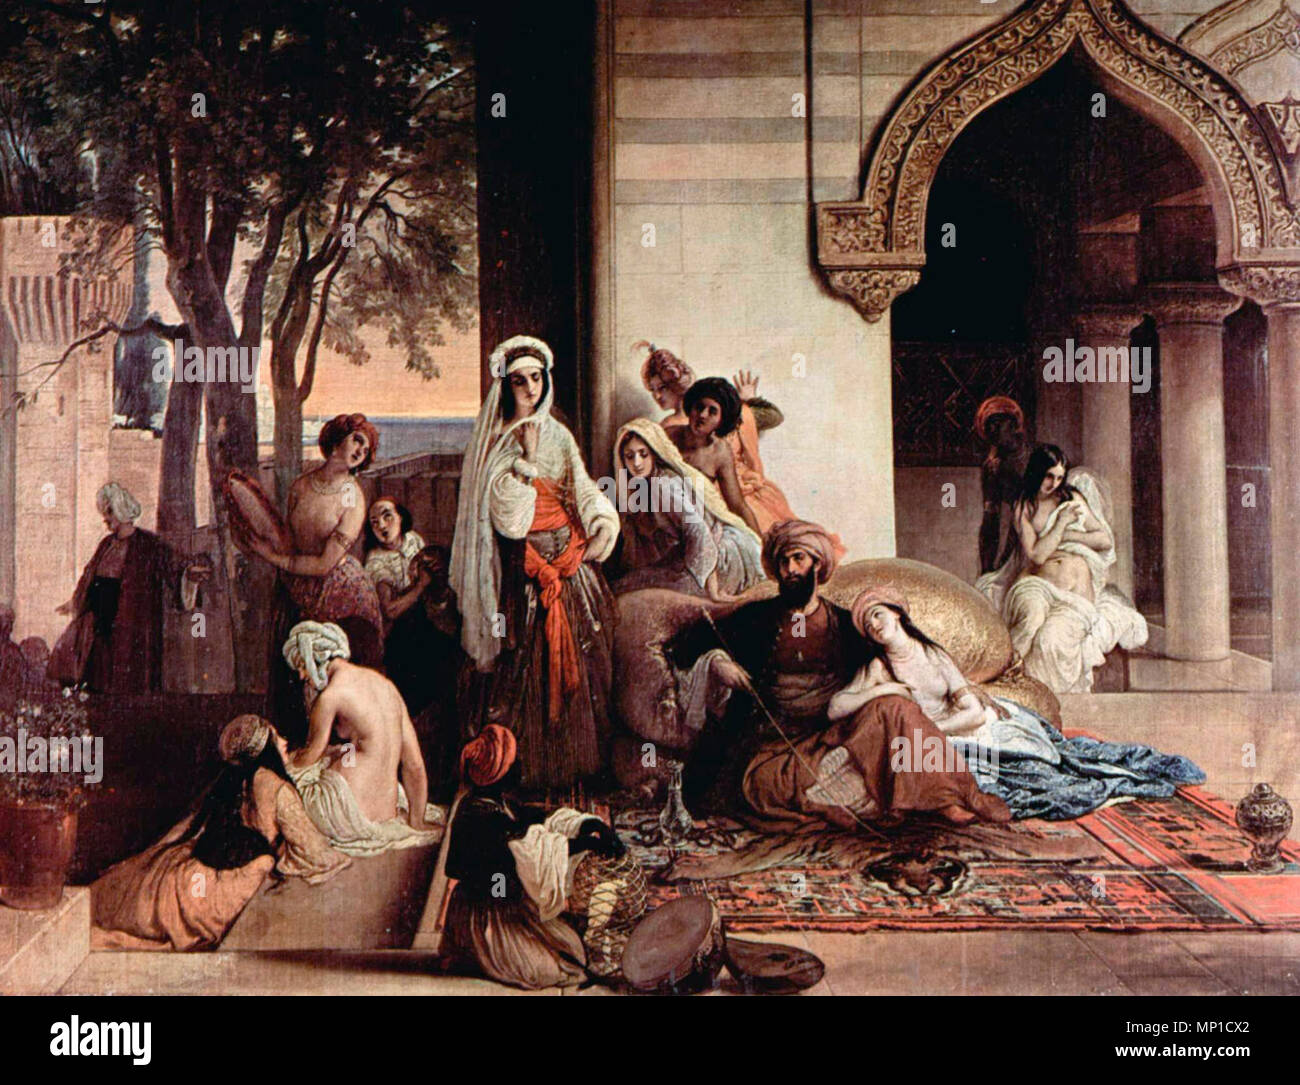 The new favorite (harem scene) - Francesco Hayez, 1866 Stock Photo